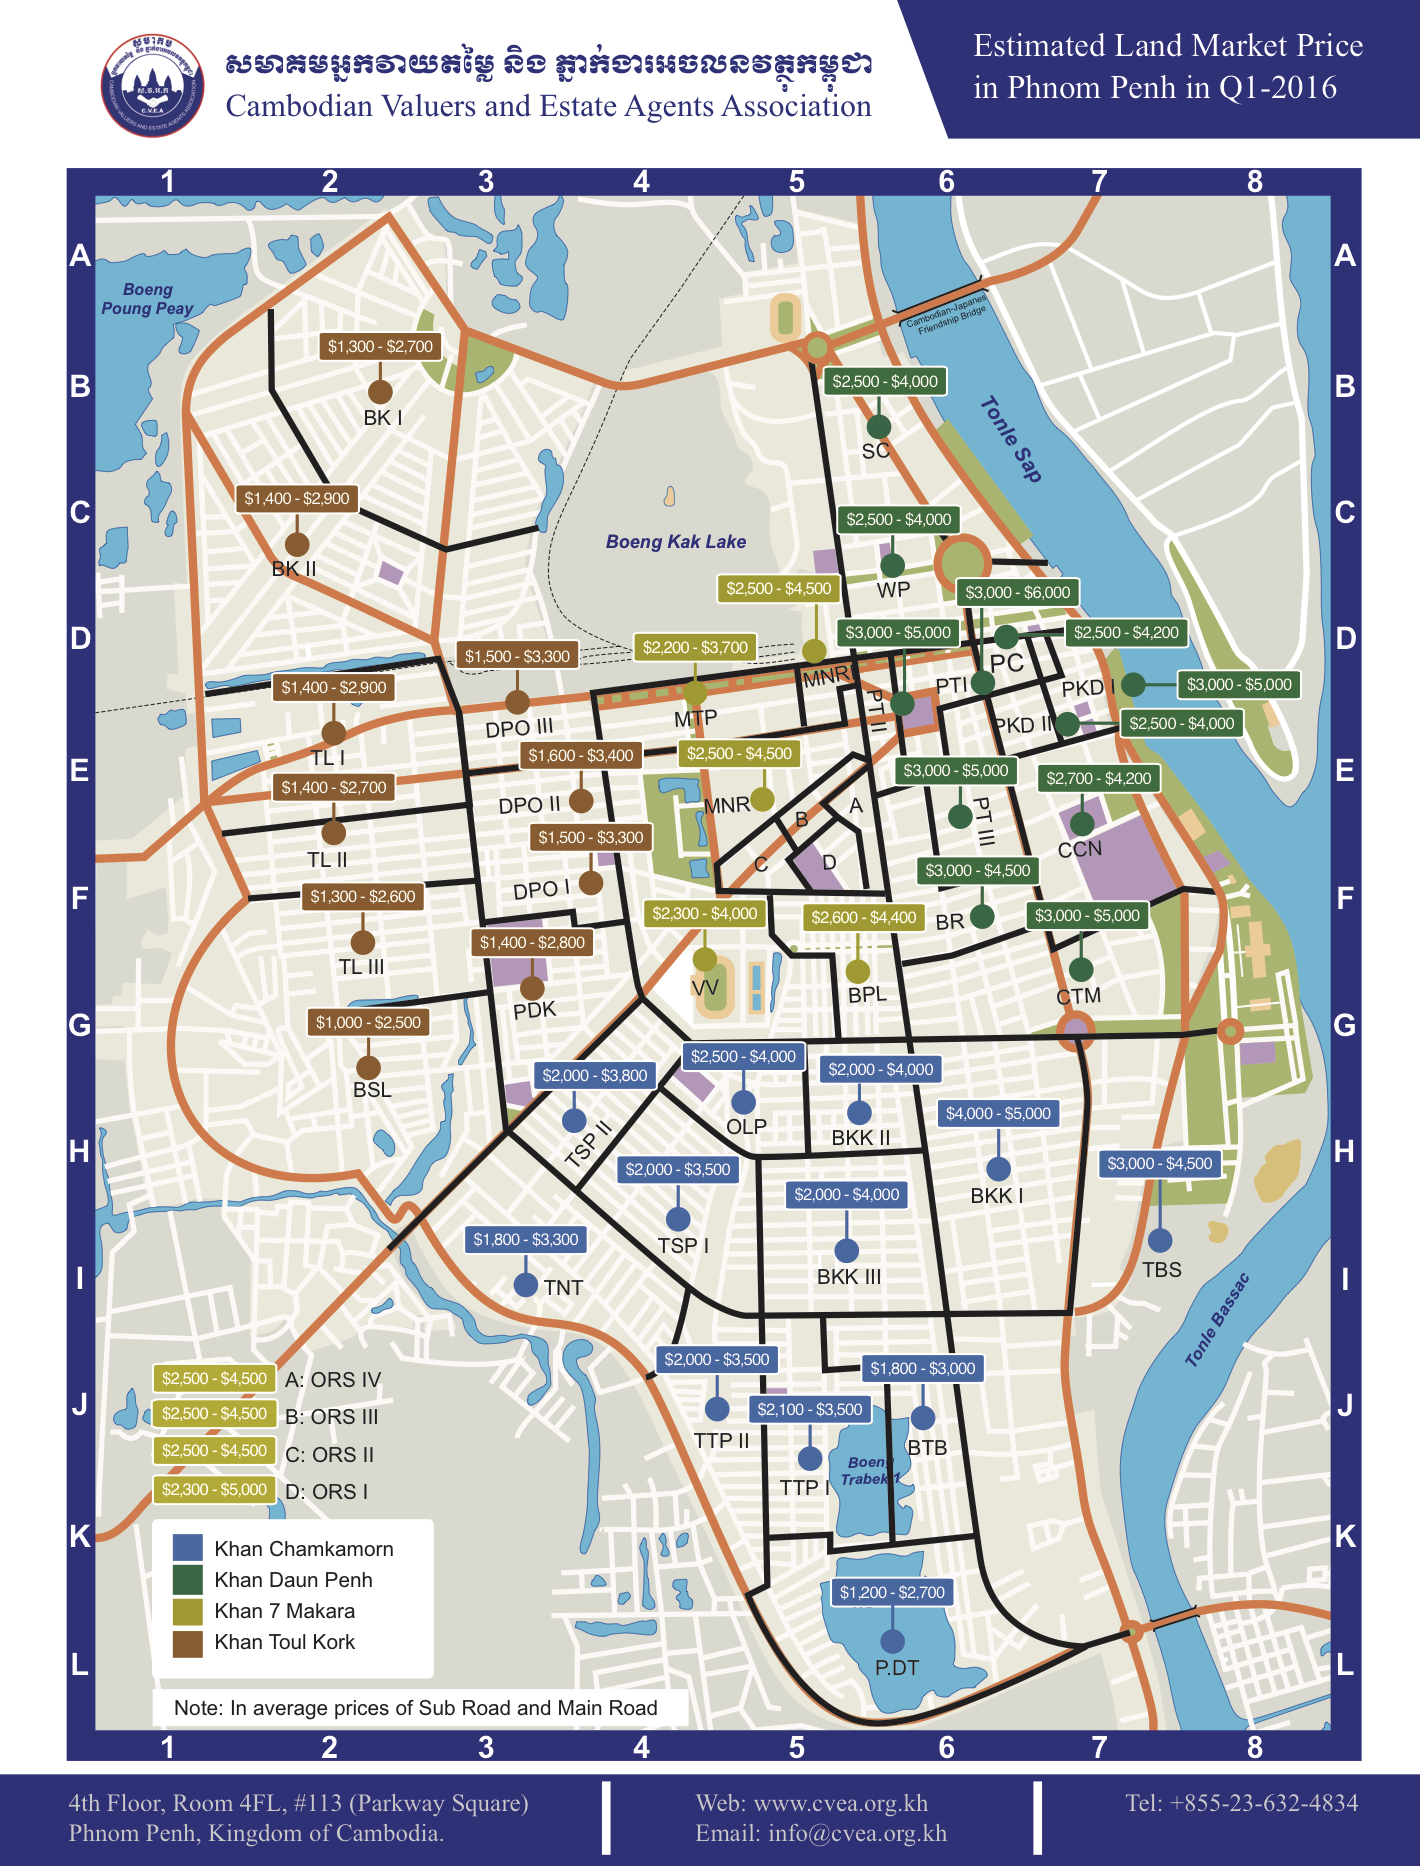 Phnom Penh Land Price Map, Q1 2016